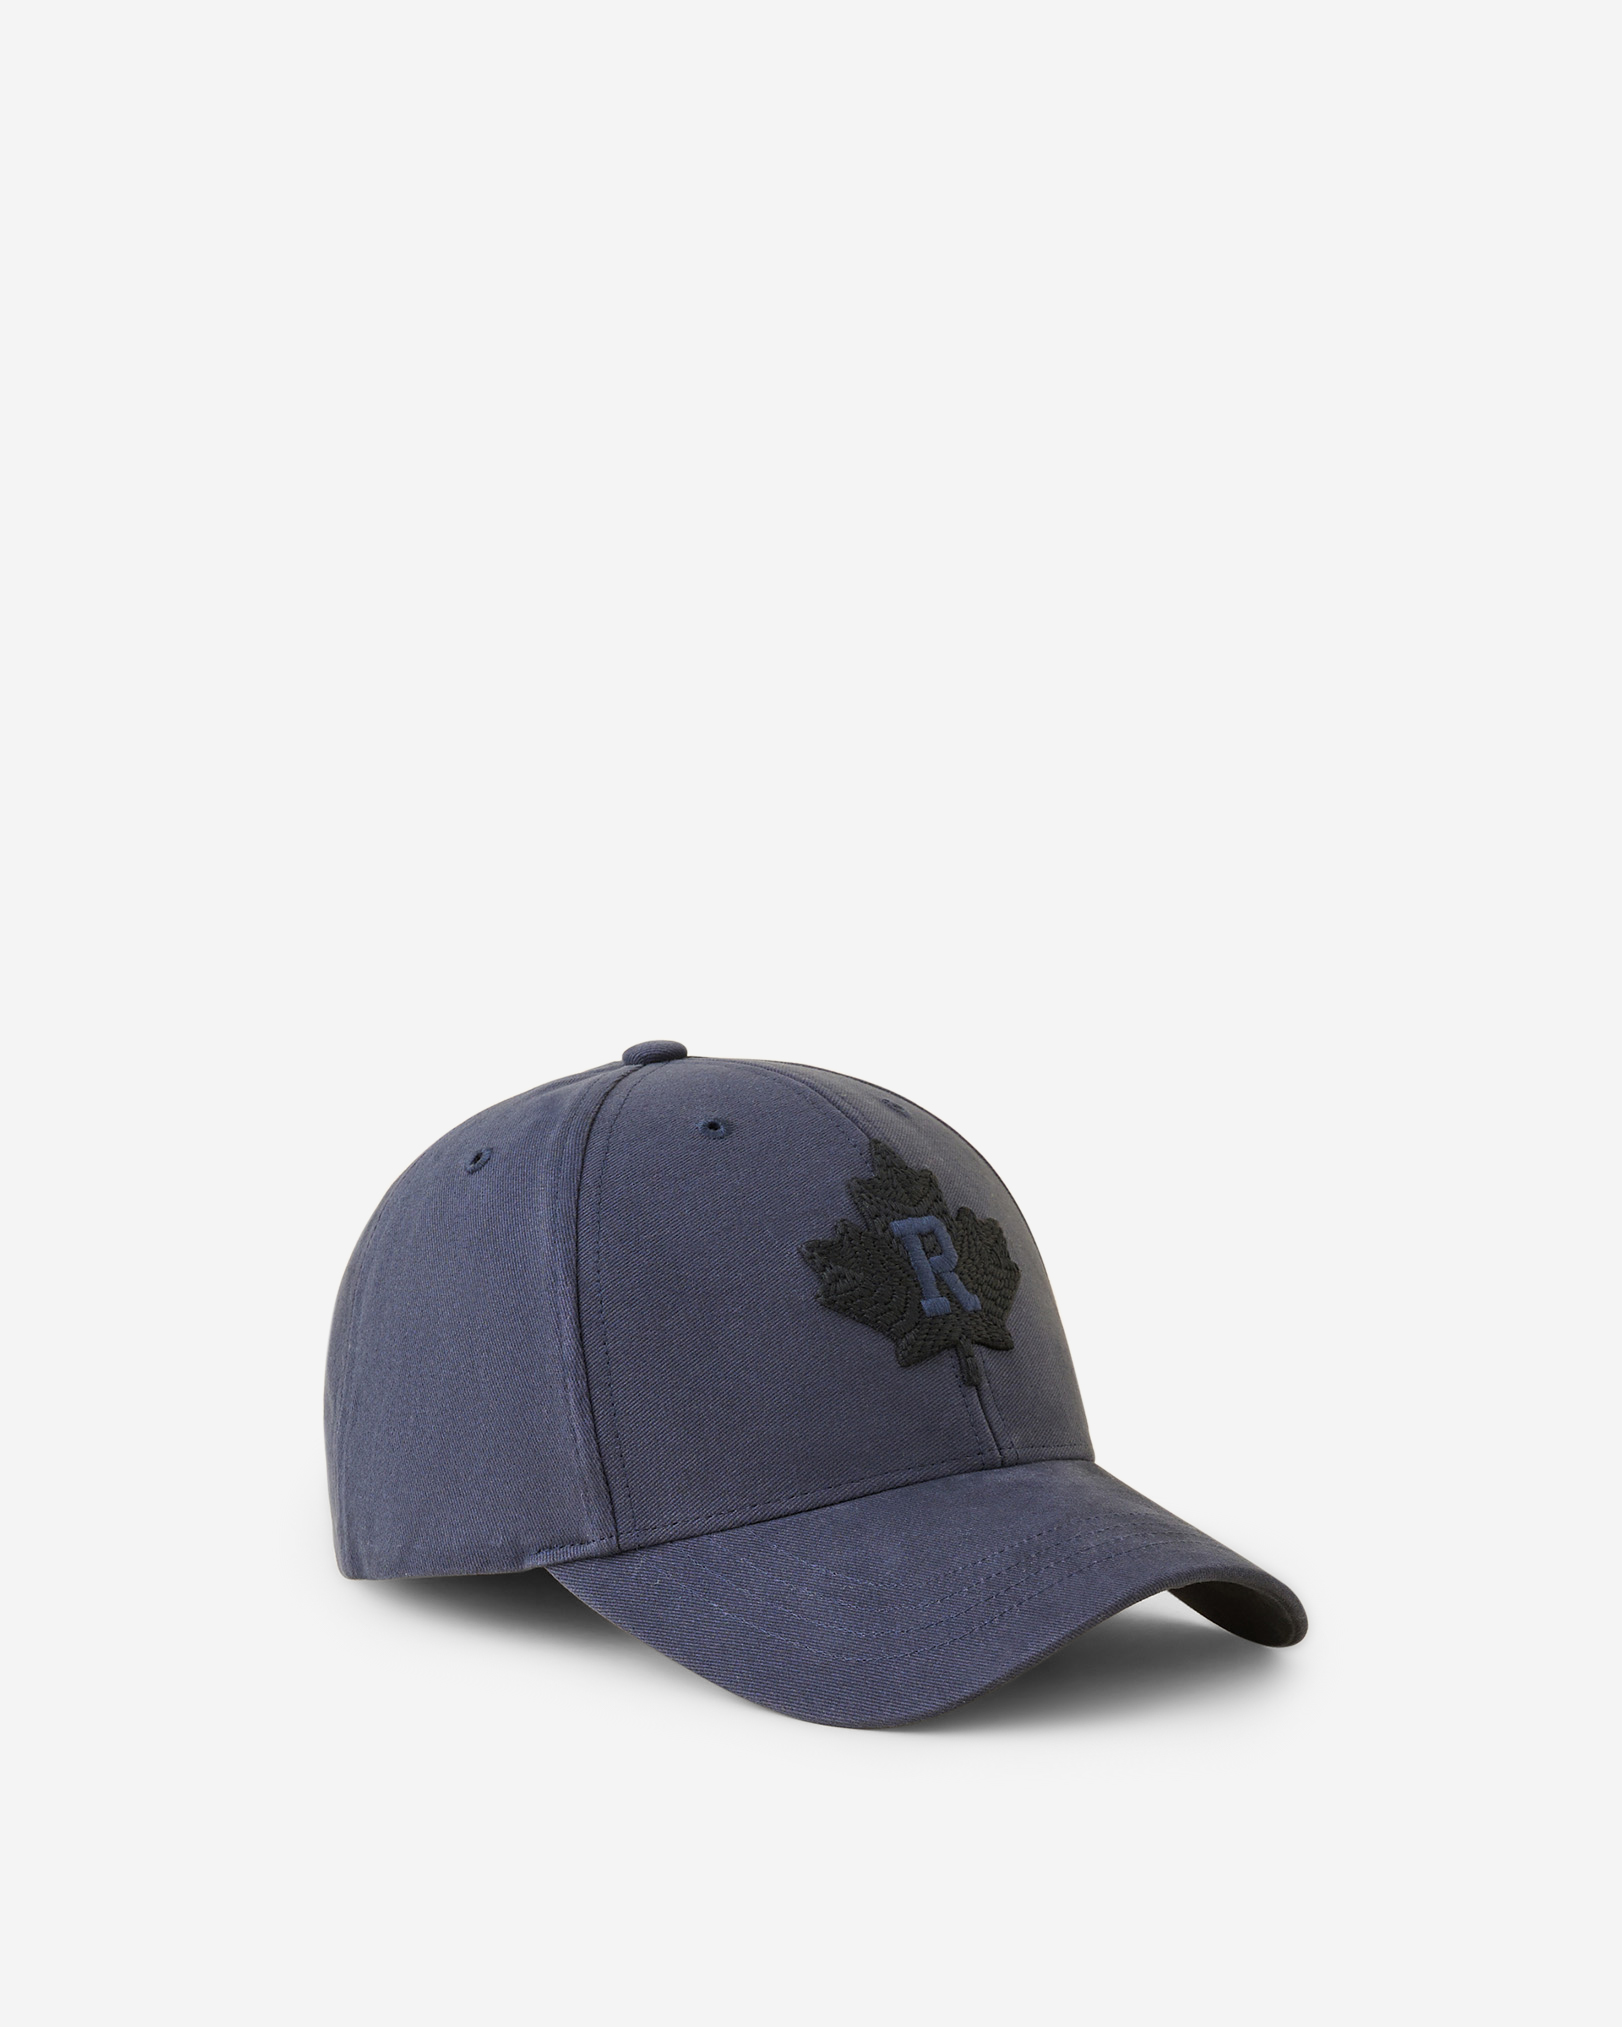 Roots Modern Leaf Baseball Cap Hat in Graphite